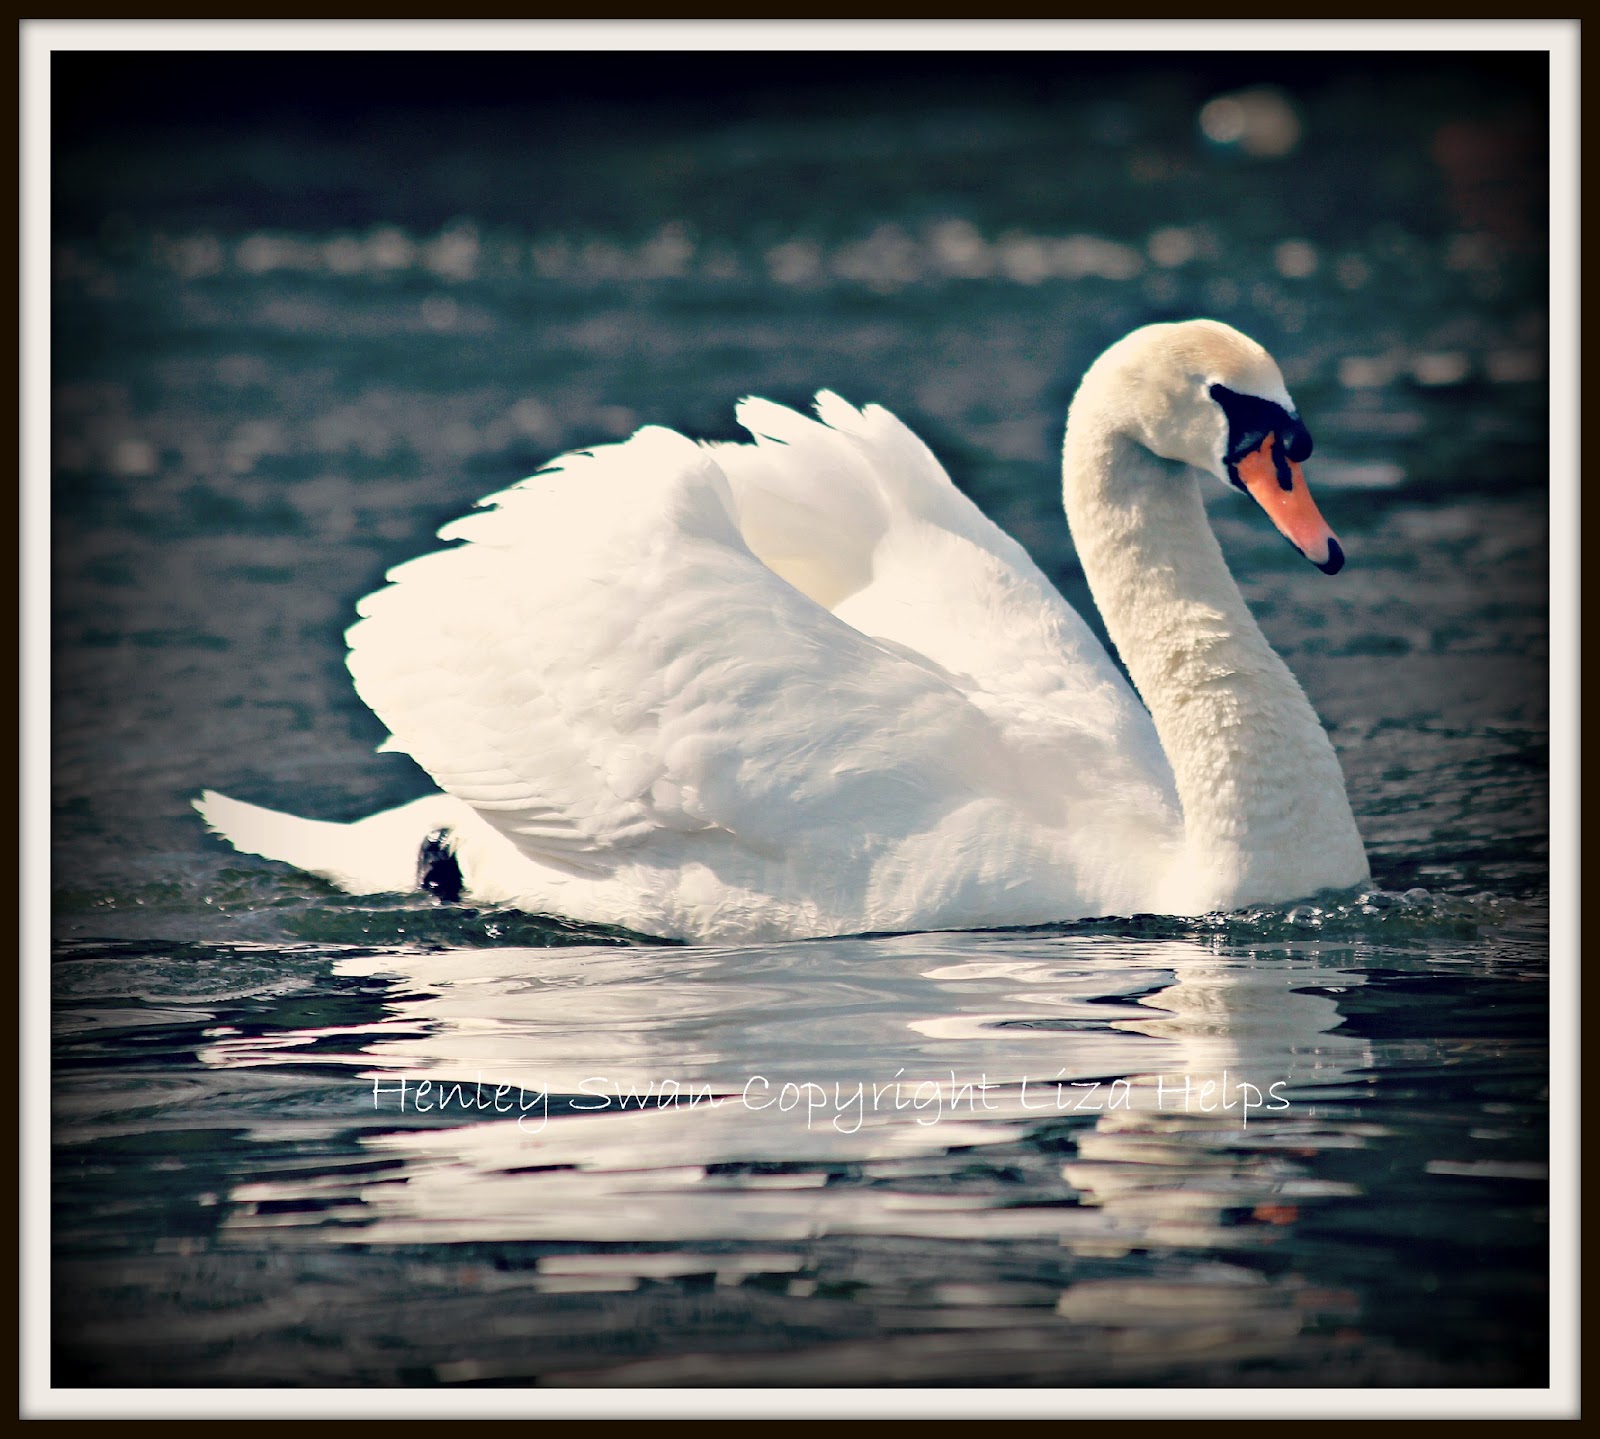 Tattie Weasle: Depression: Swimming like a Swan – the real me…